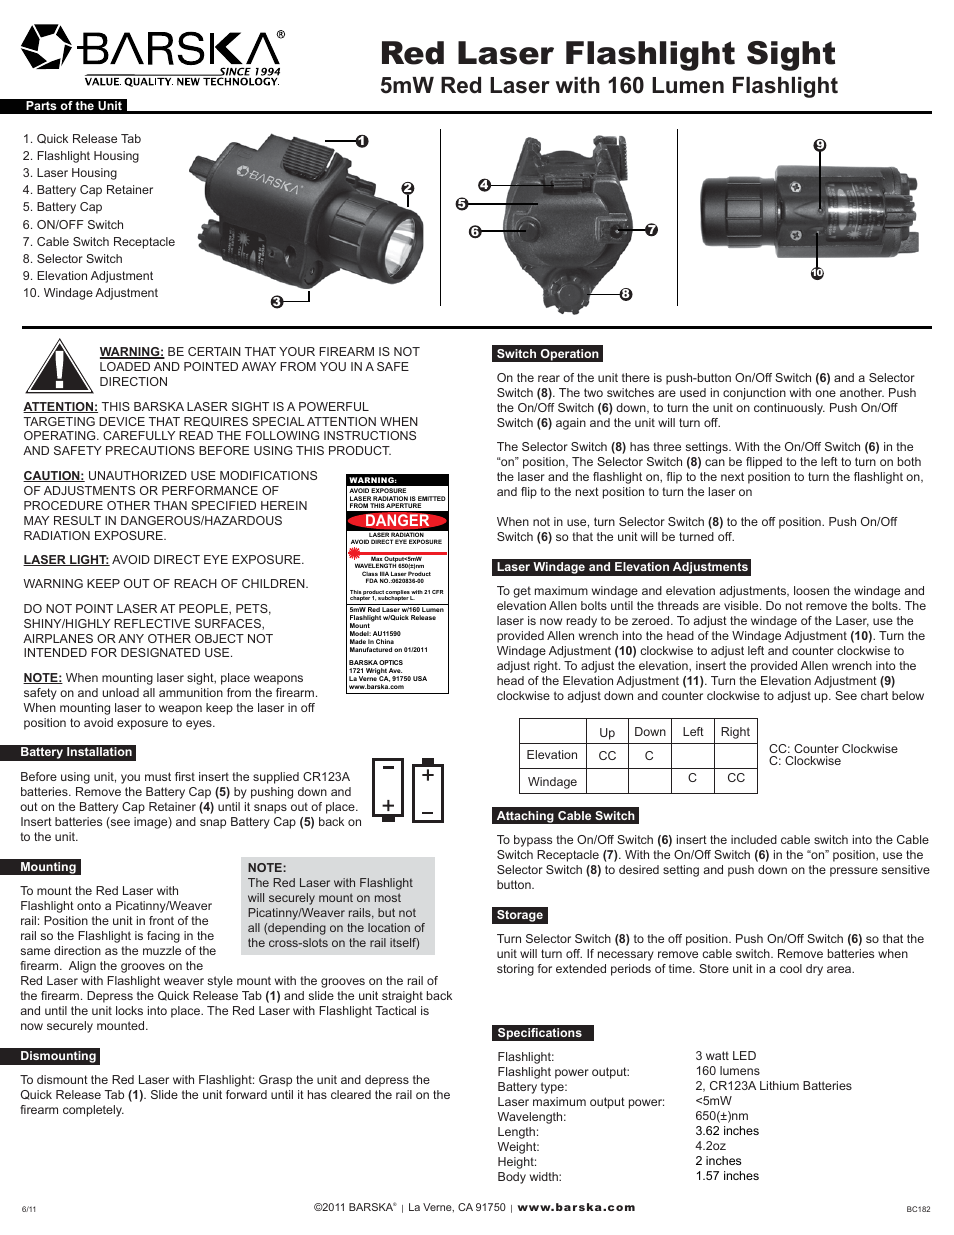 BARSKA AU11590 Red Laser w/160 Lumen Flashlight User Manual | 1 page